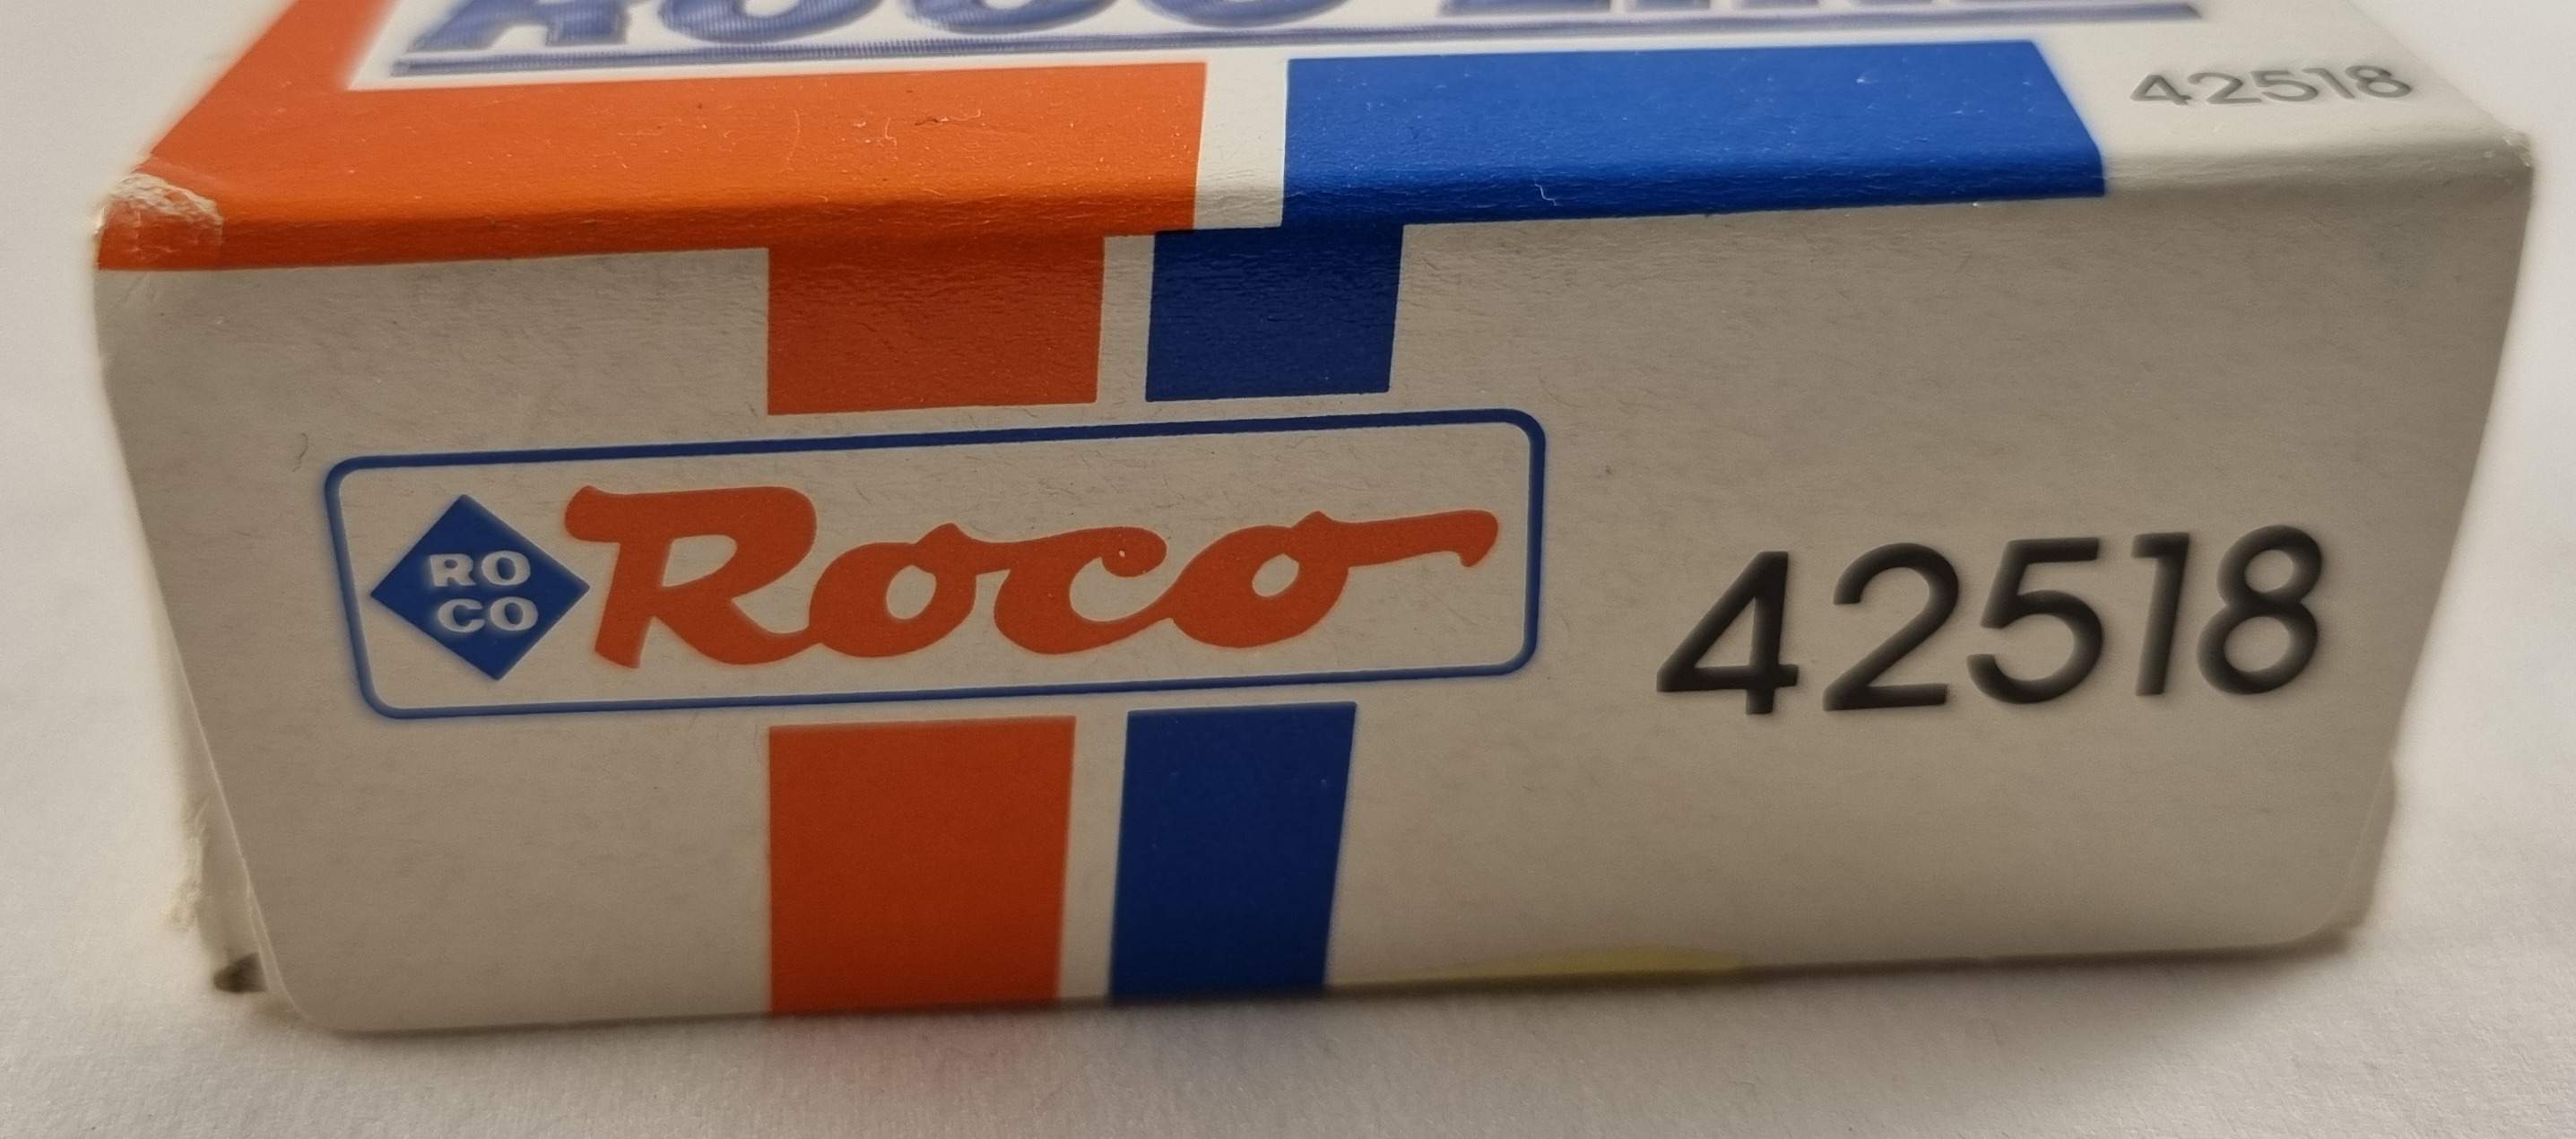 Roco 42518, Kontrollspår, Skala H0, Roco 2